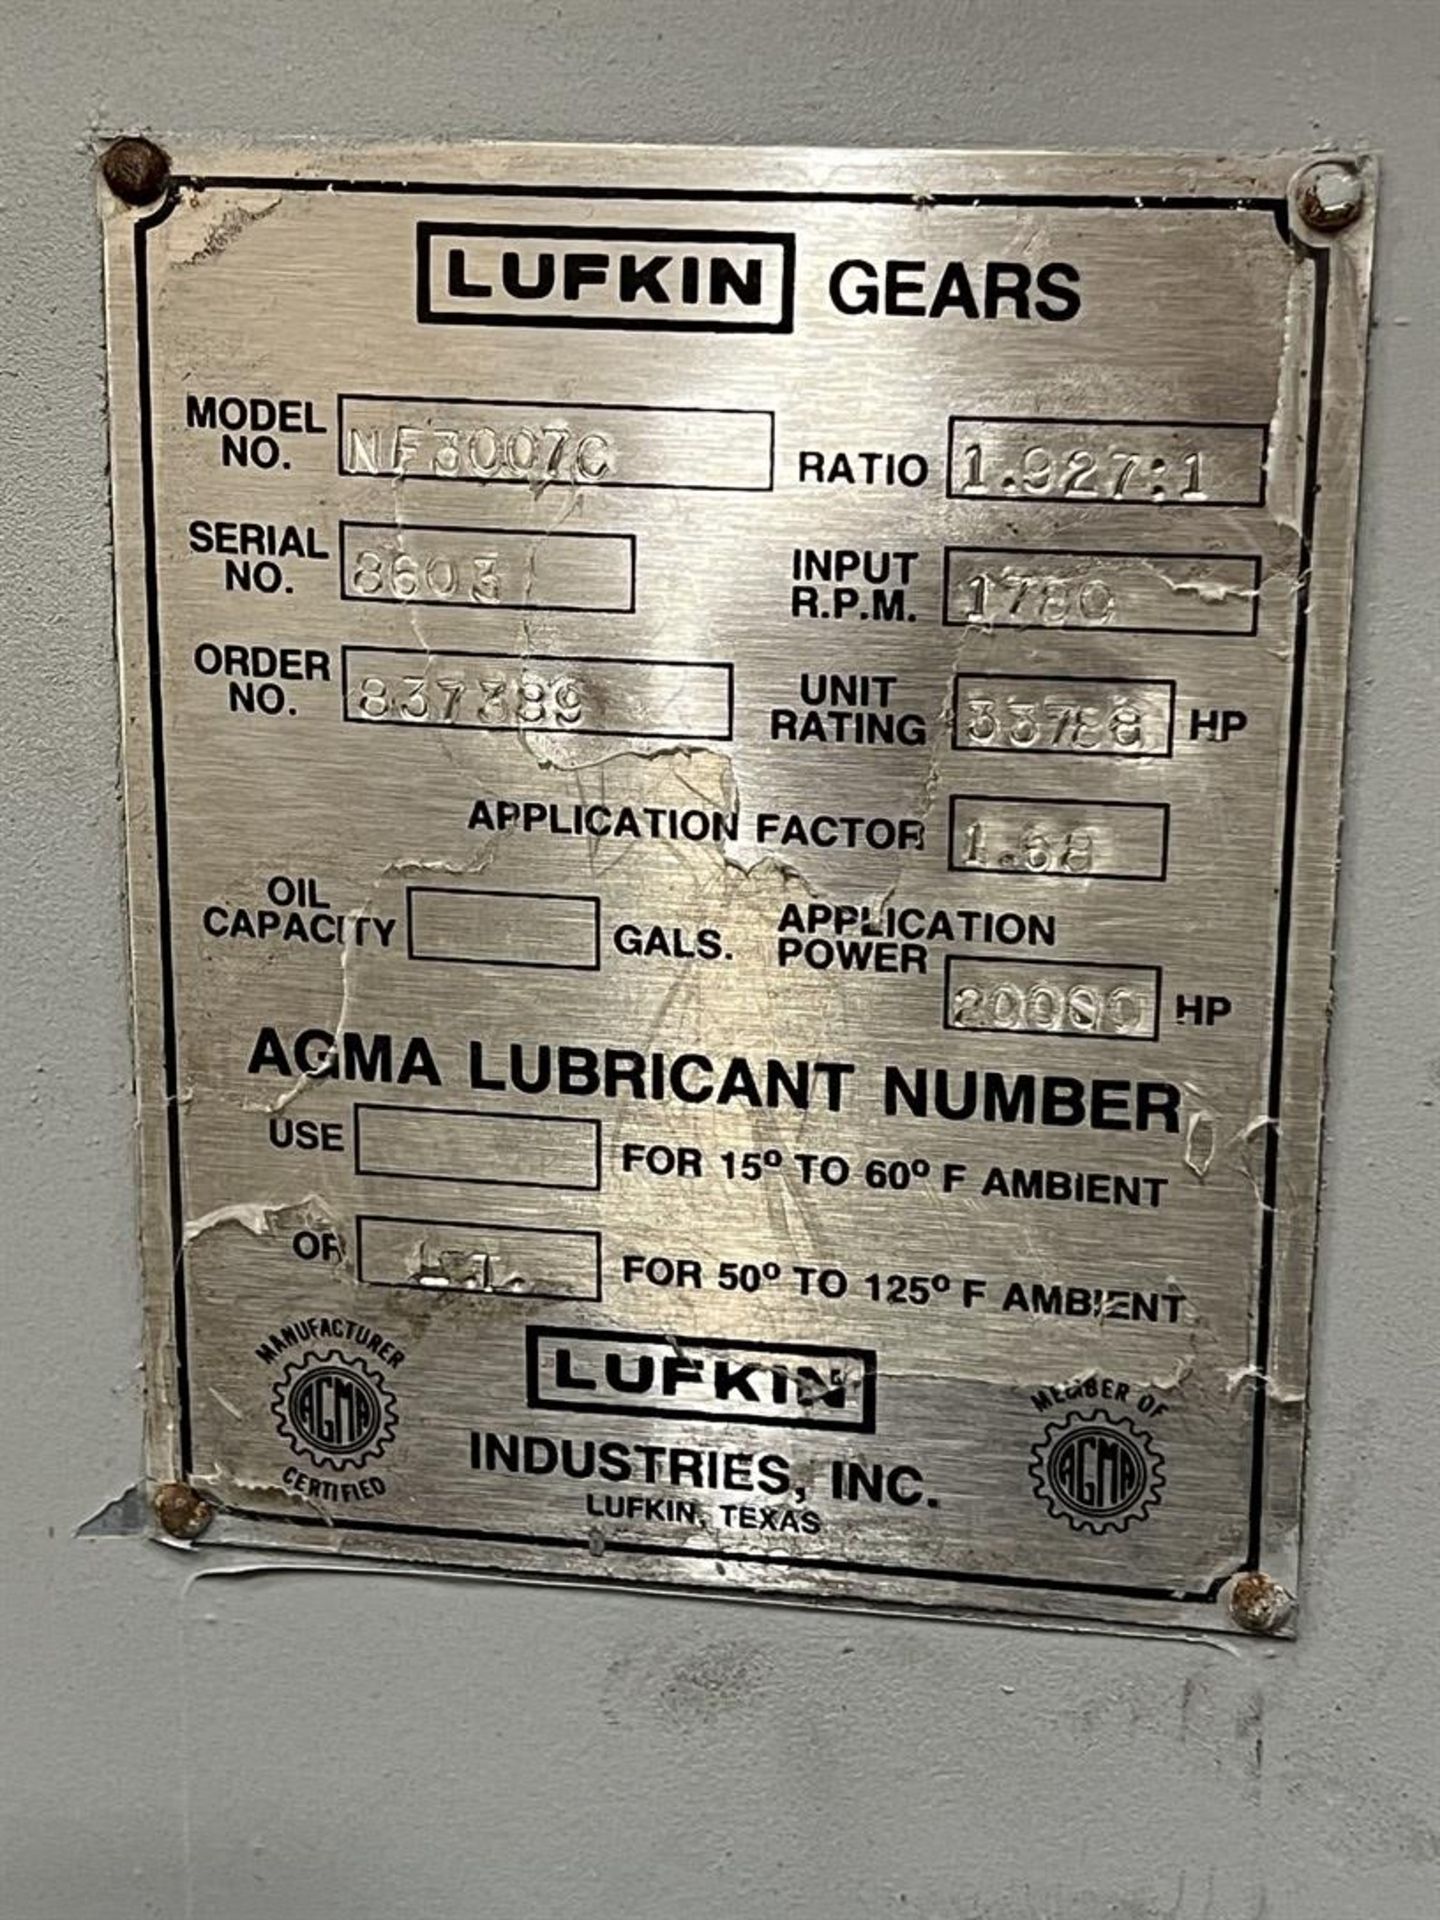 LUFKIN NF3007C Gear Box, s/n 8603, 1.9278:1 Gear Ratio - Image 5 of 6